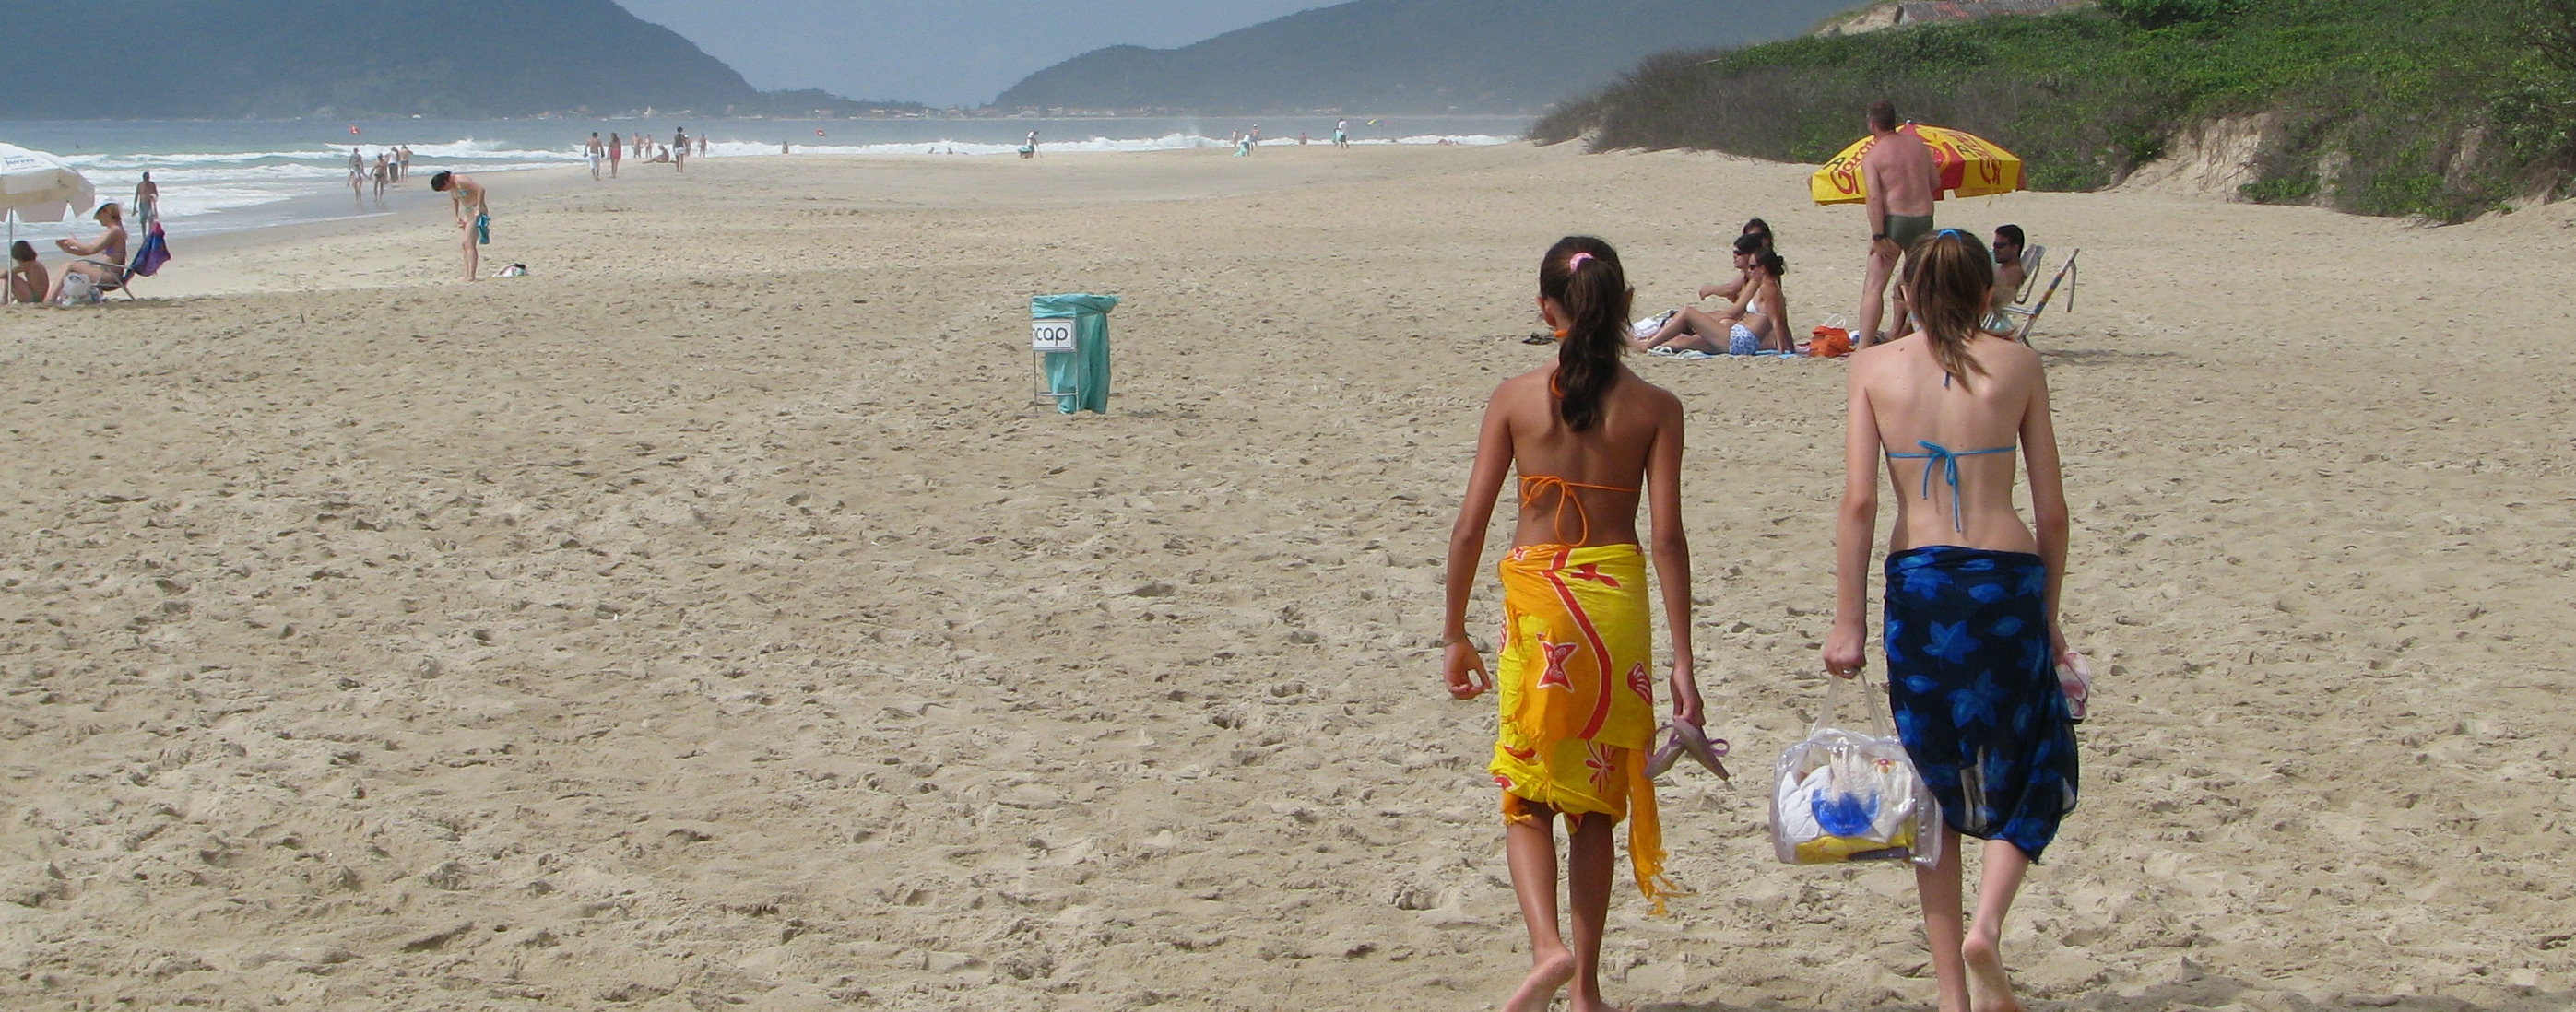 Florianopolis-beach-Brazil-Santa Catarina-Joiquina-